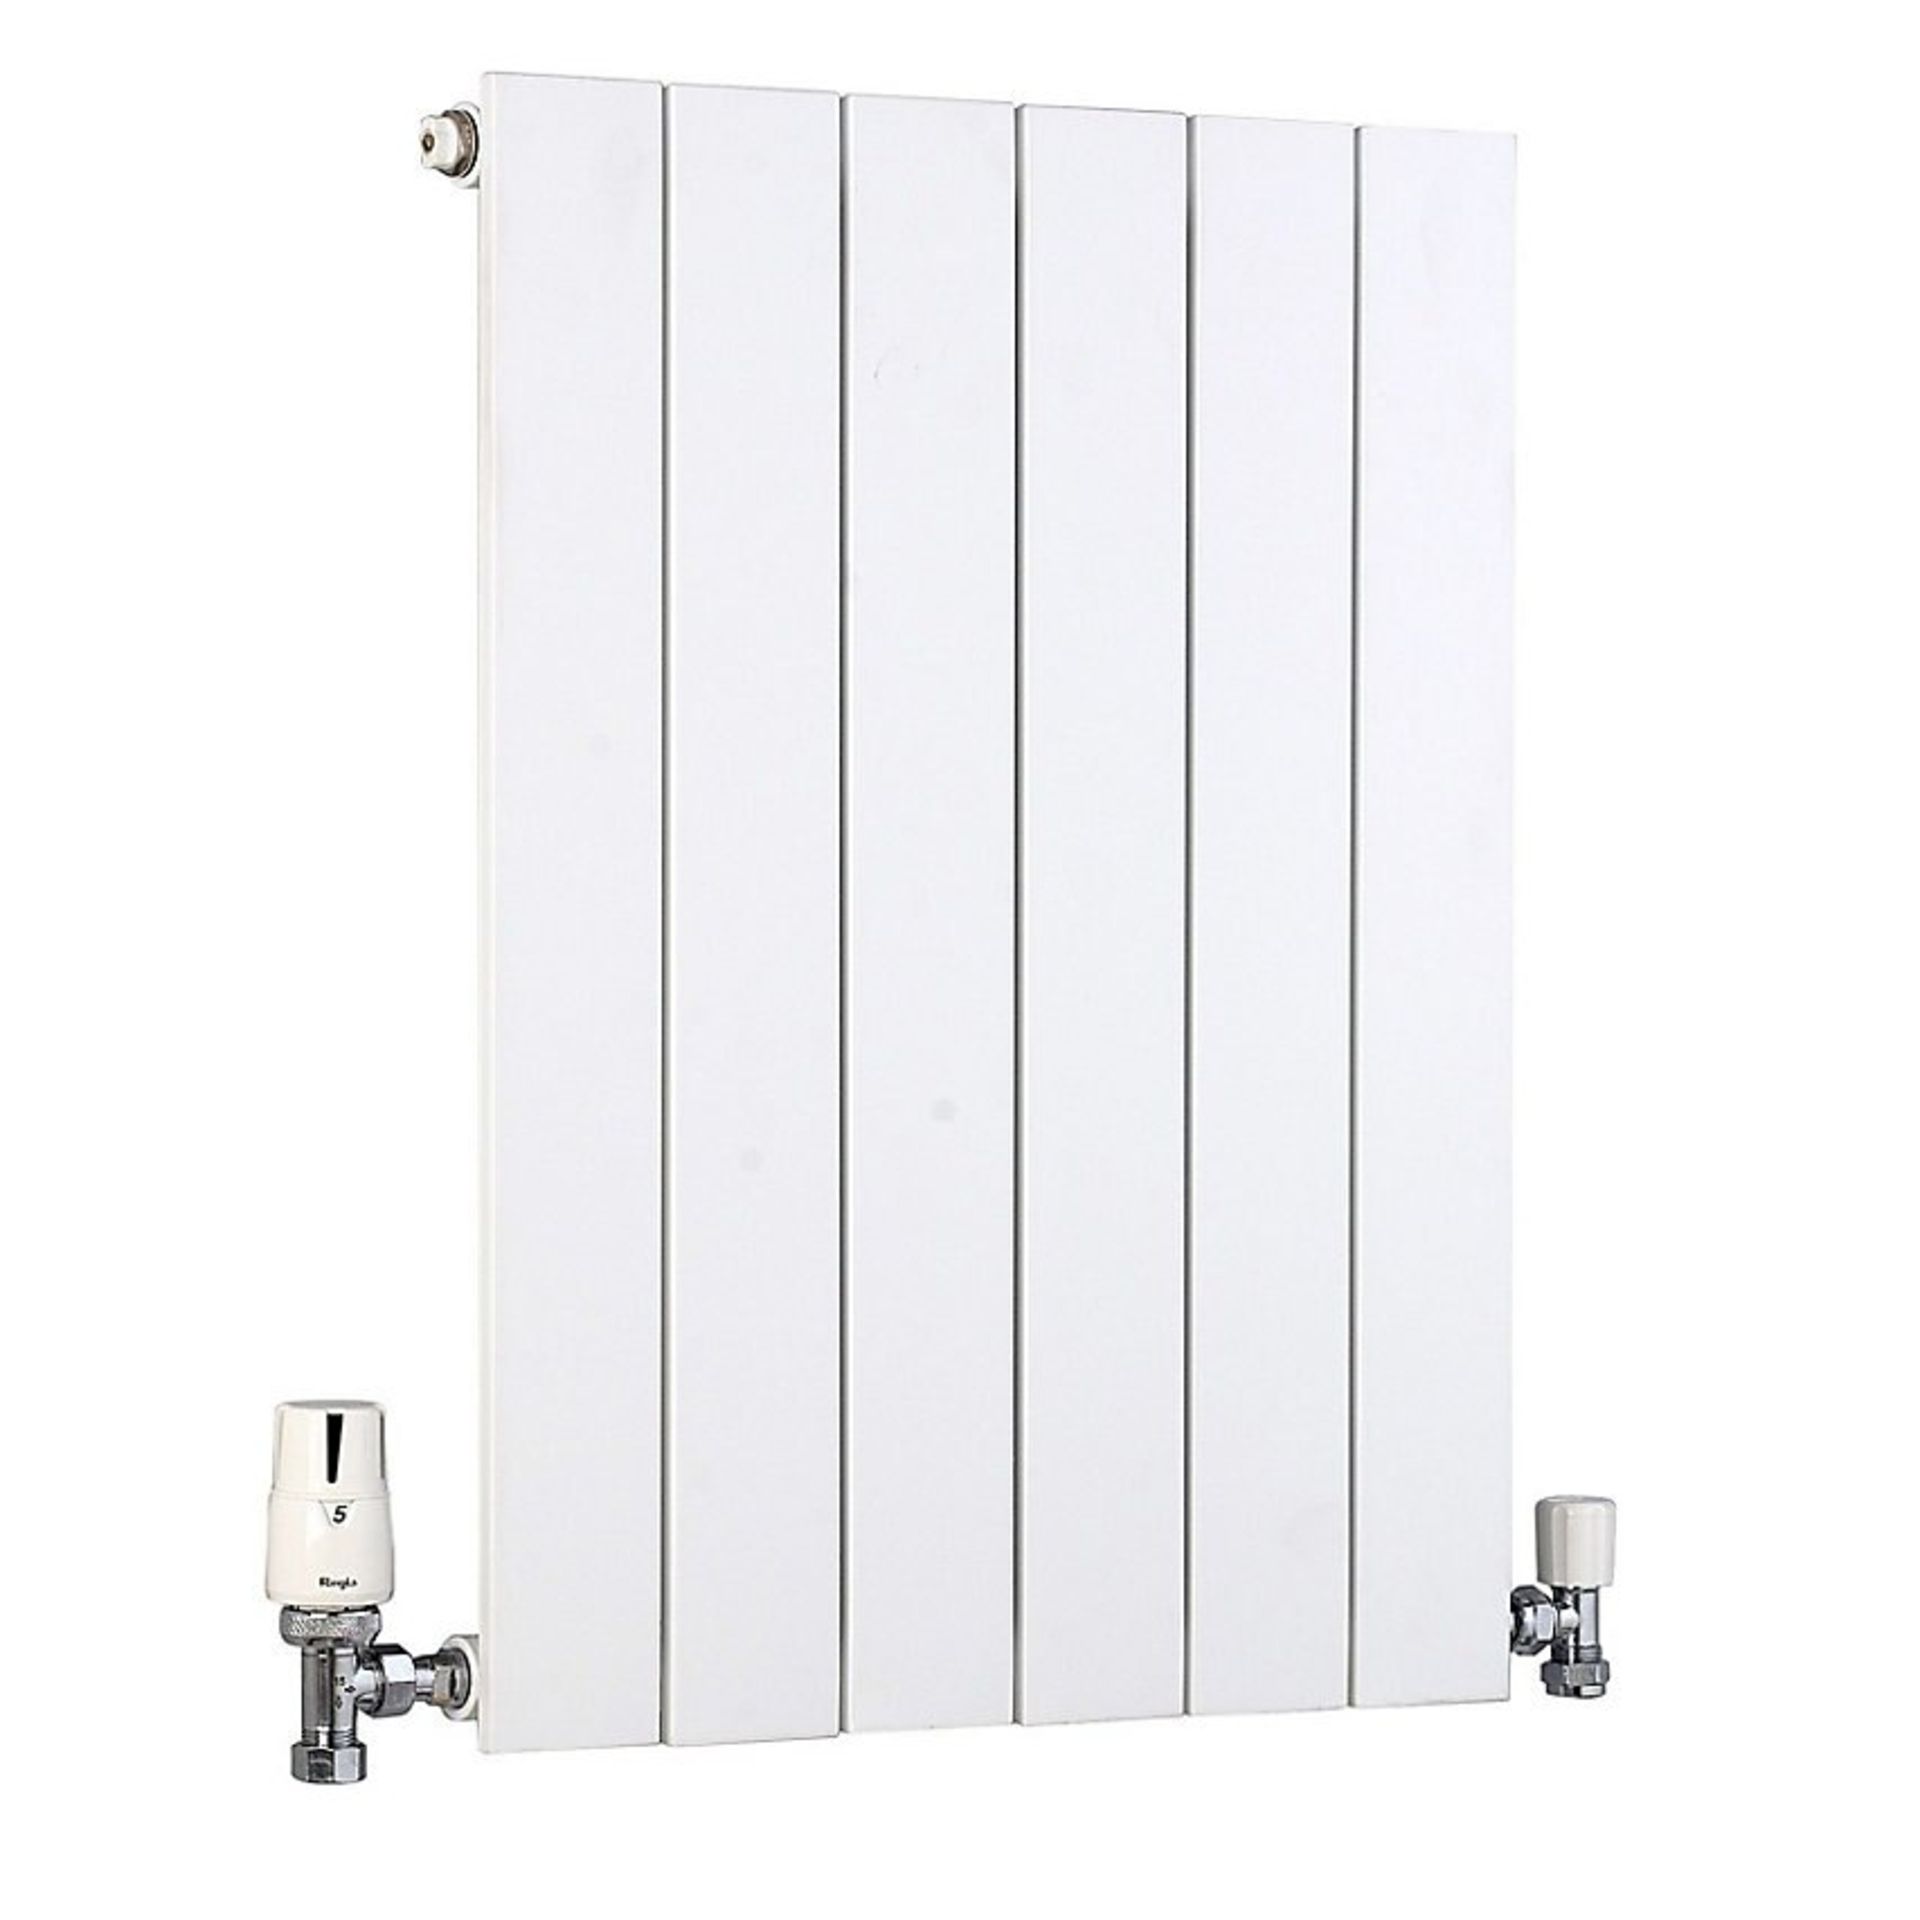 (CC128) 600x595mm Ximax Vertirad Vertical/horizontal Designer radiator White. RRP £226.00. Dis... - Image 2 of 2